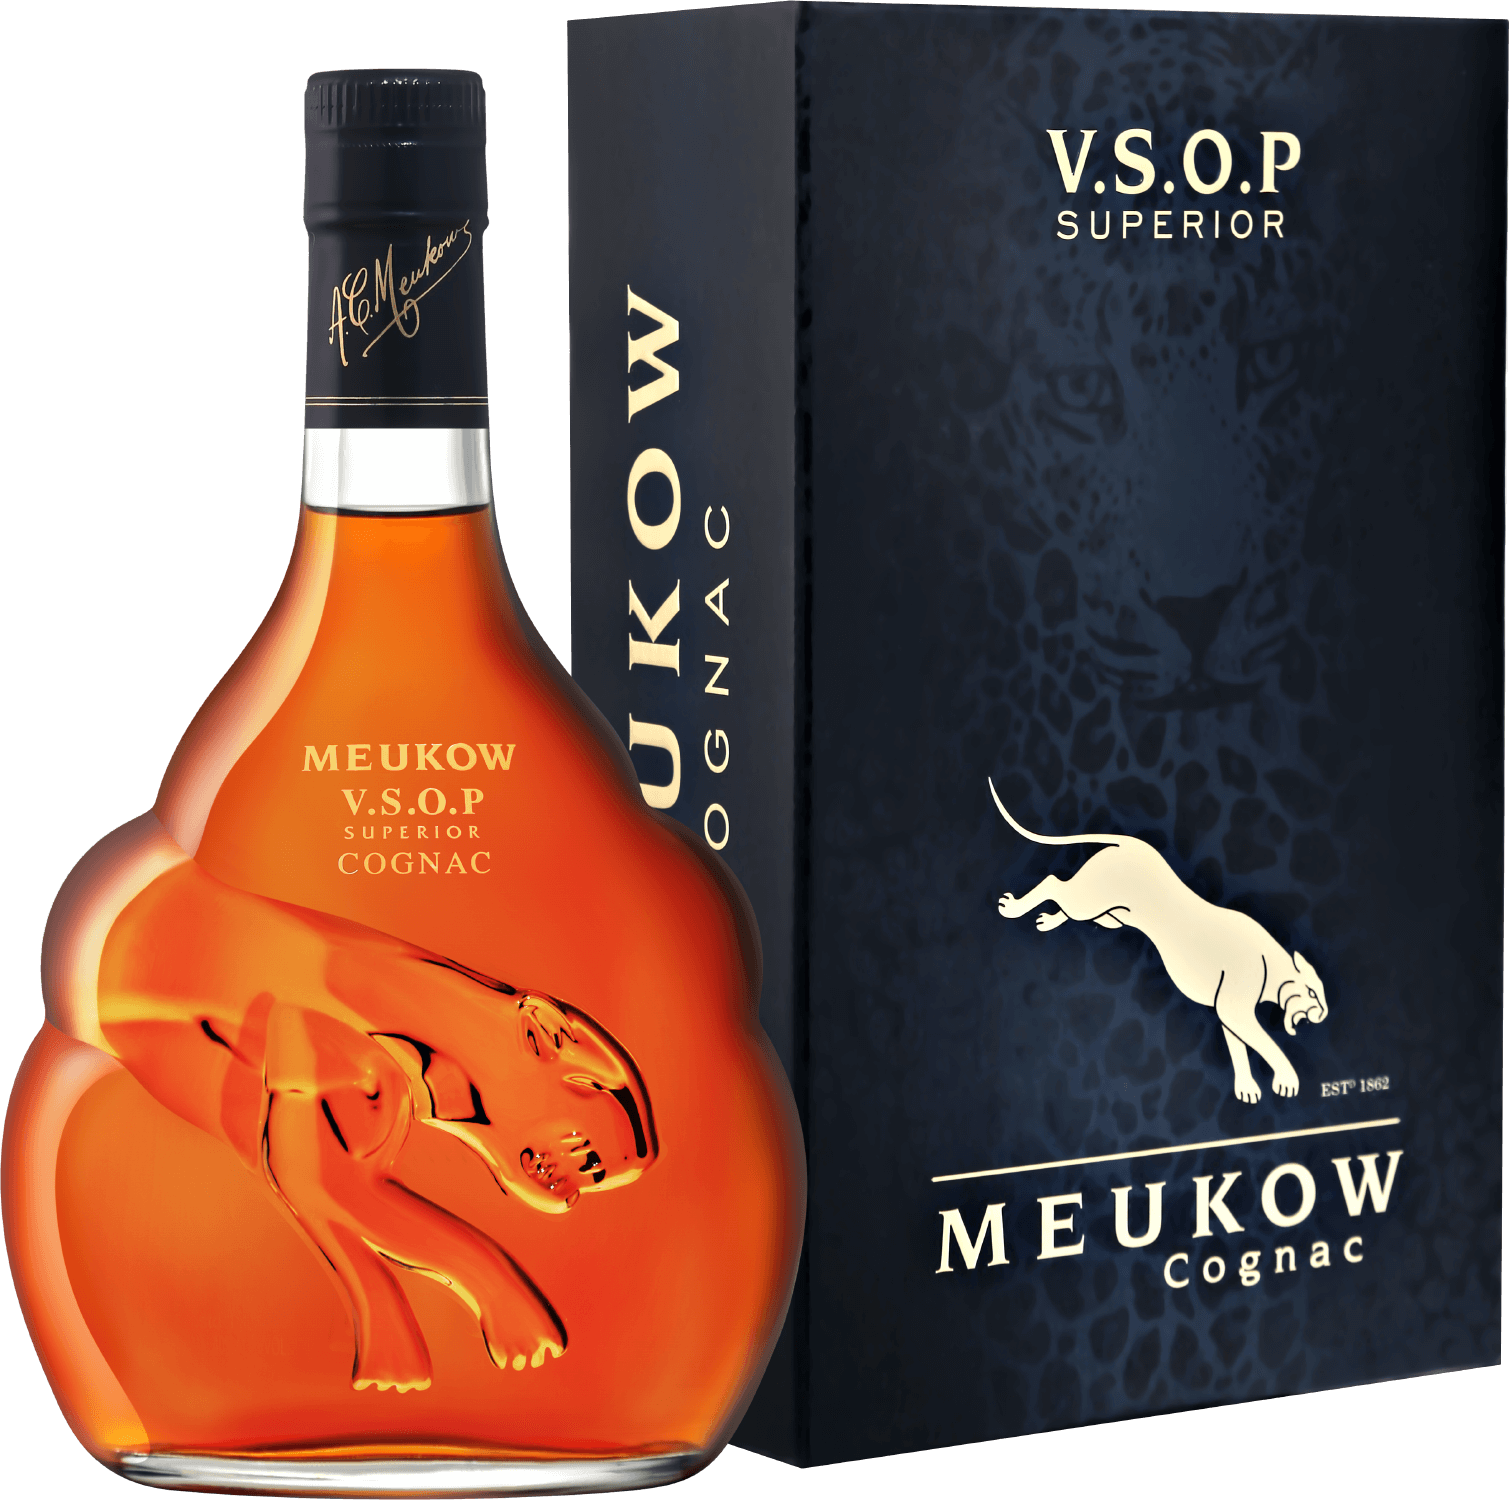 Meukow Cognac VSOP Superior (gift box) roullet cognac vsop gift box